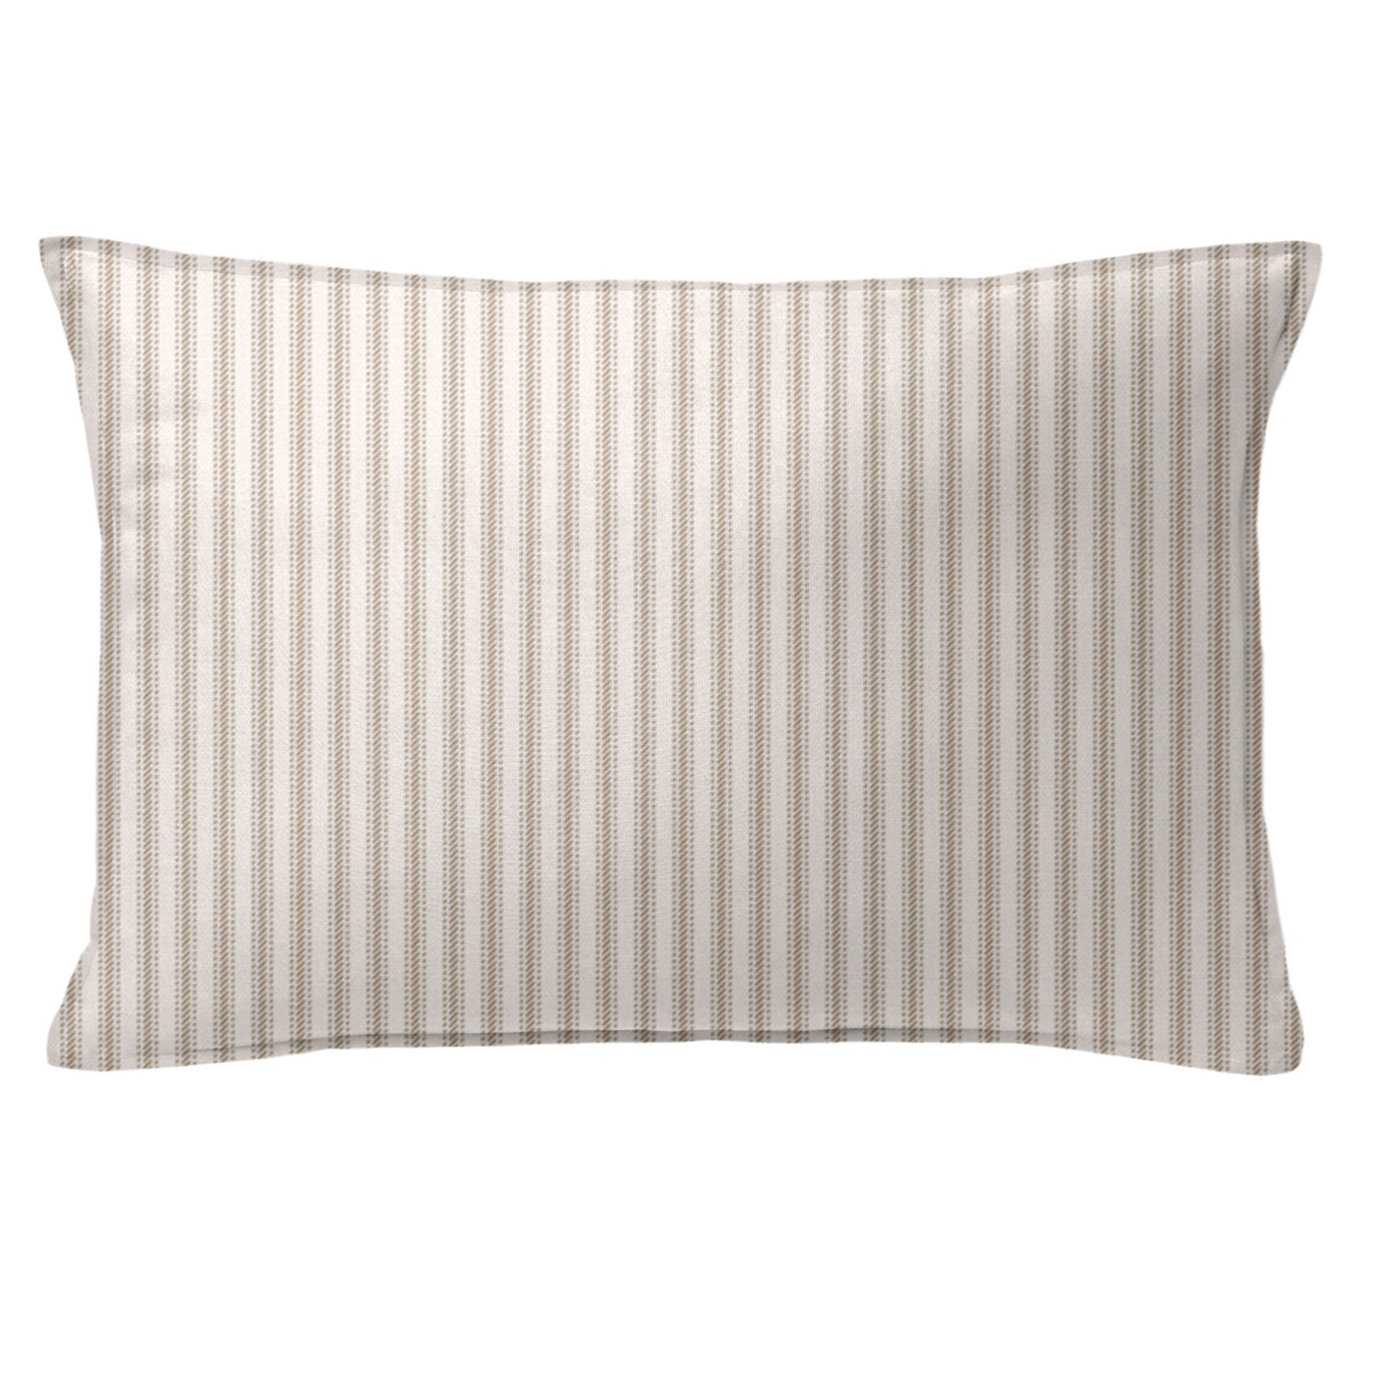 Cruz Ticking Stripes Taupe/Ivory Decorative Pillow - Size 14"x20" Rectangle